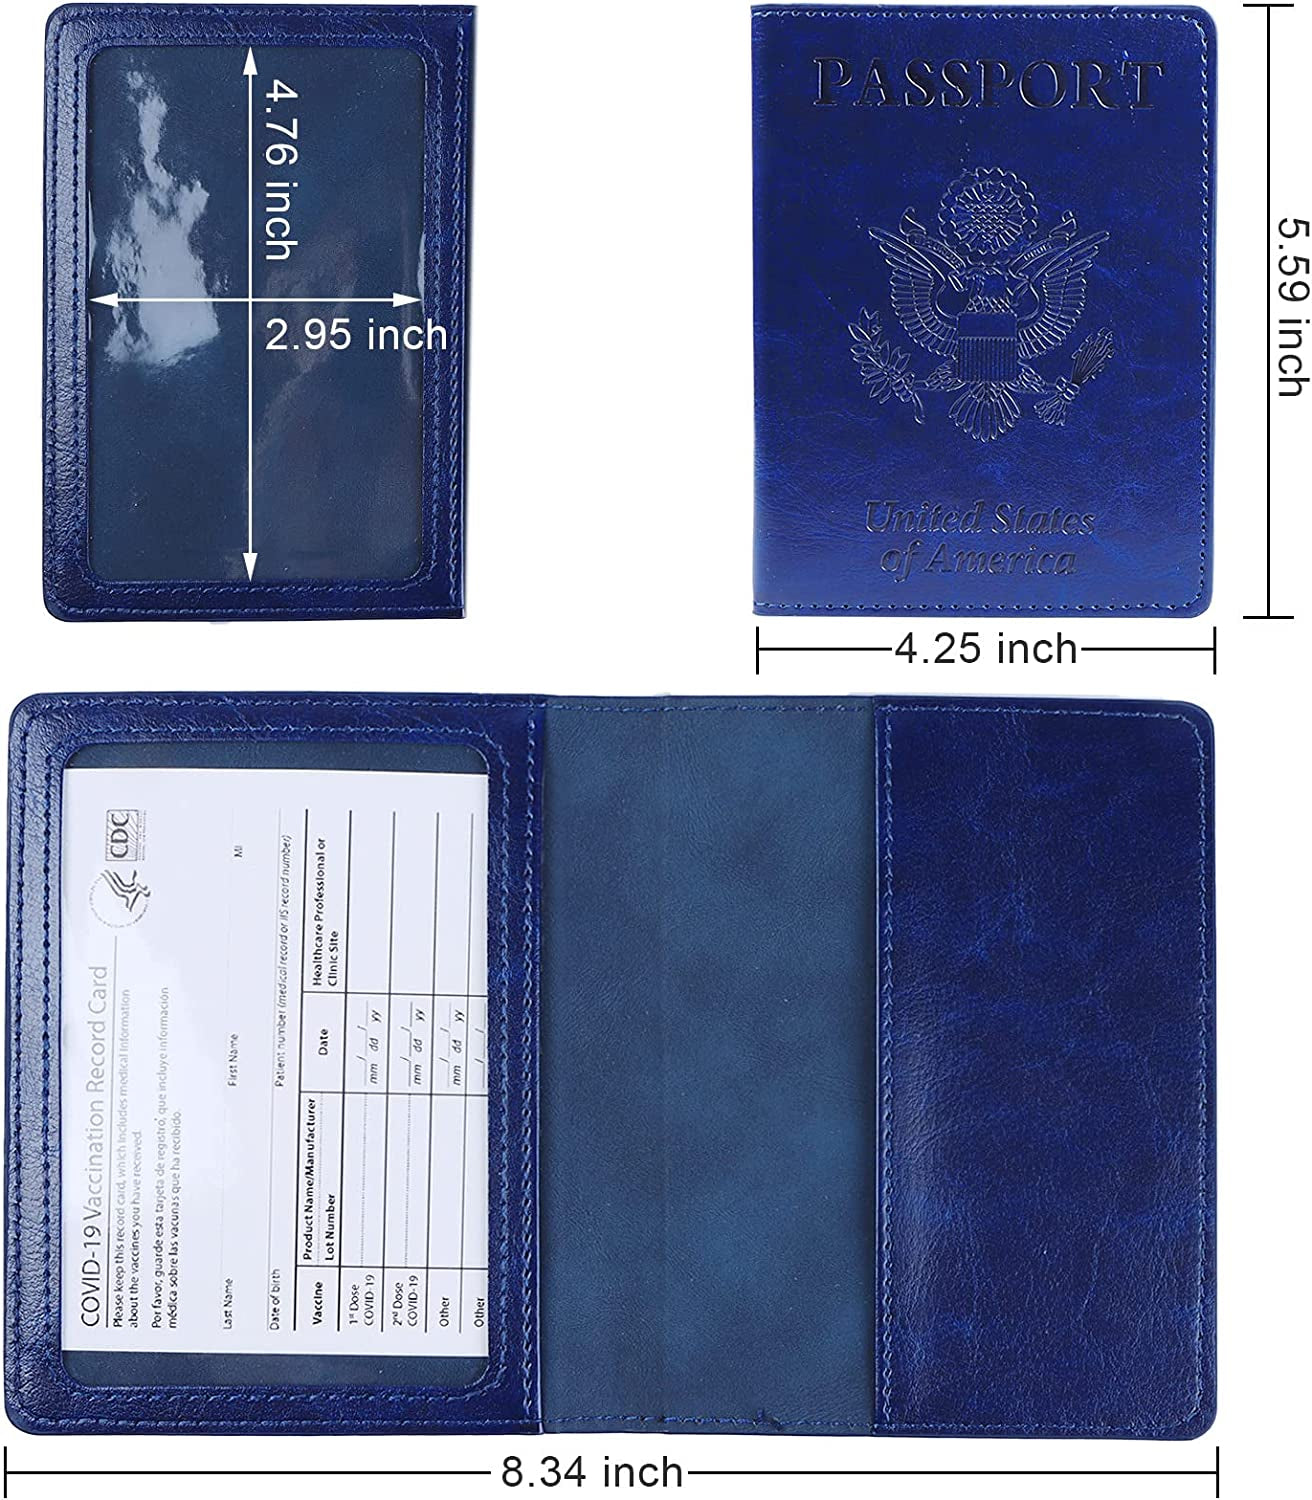 2 Pack Passport and Vaccine Card Holder Combo - Passport Holder with Vaccine Card Slot Protector, Slim Passport Cover, Pu Leather Passport Wallet Case Waterproof